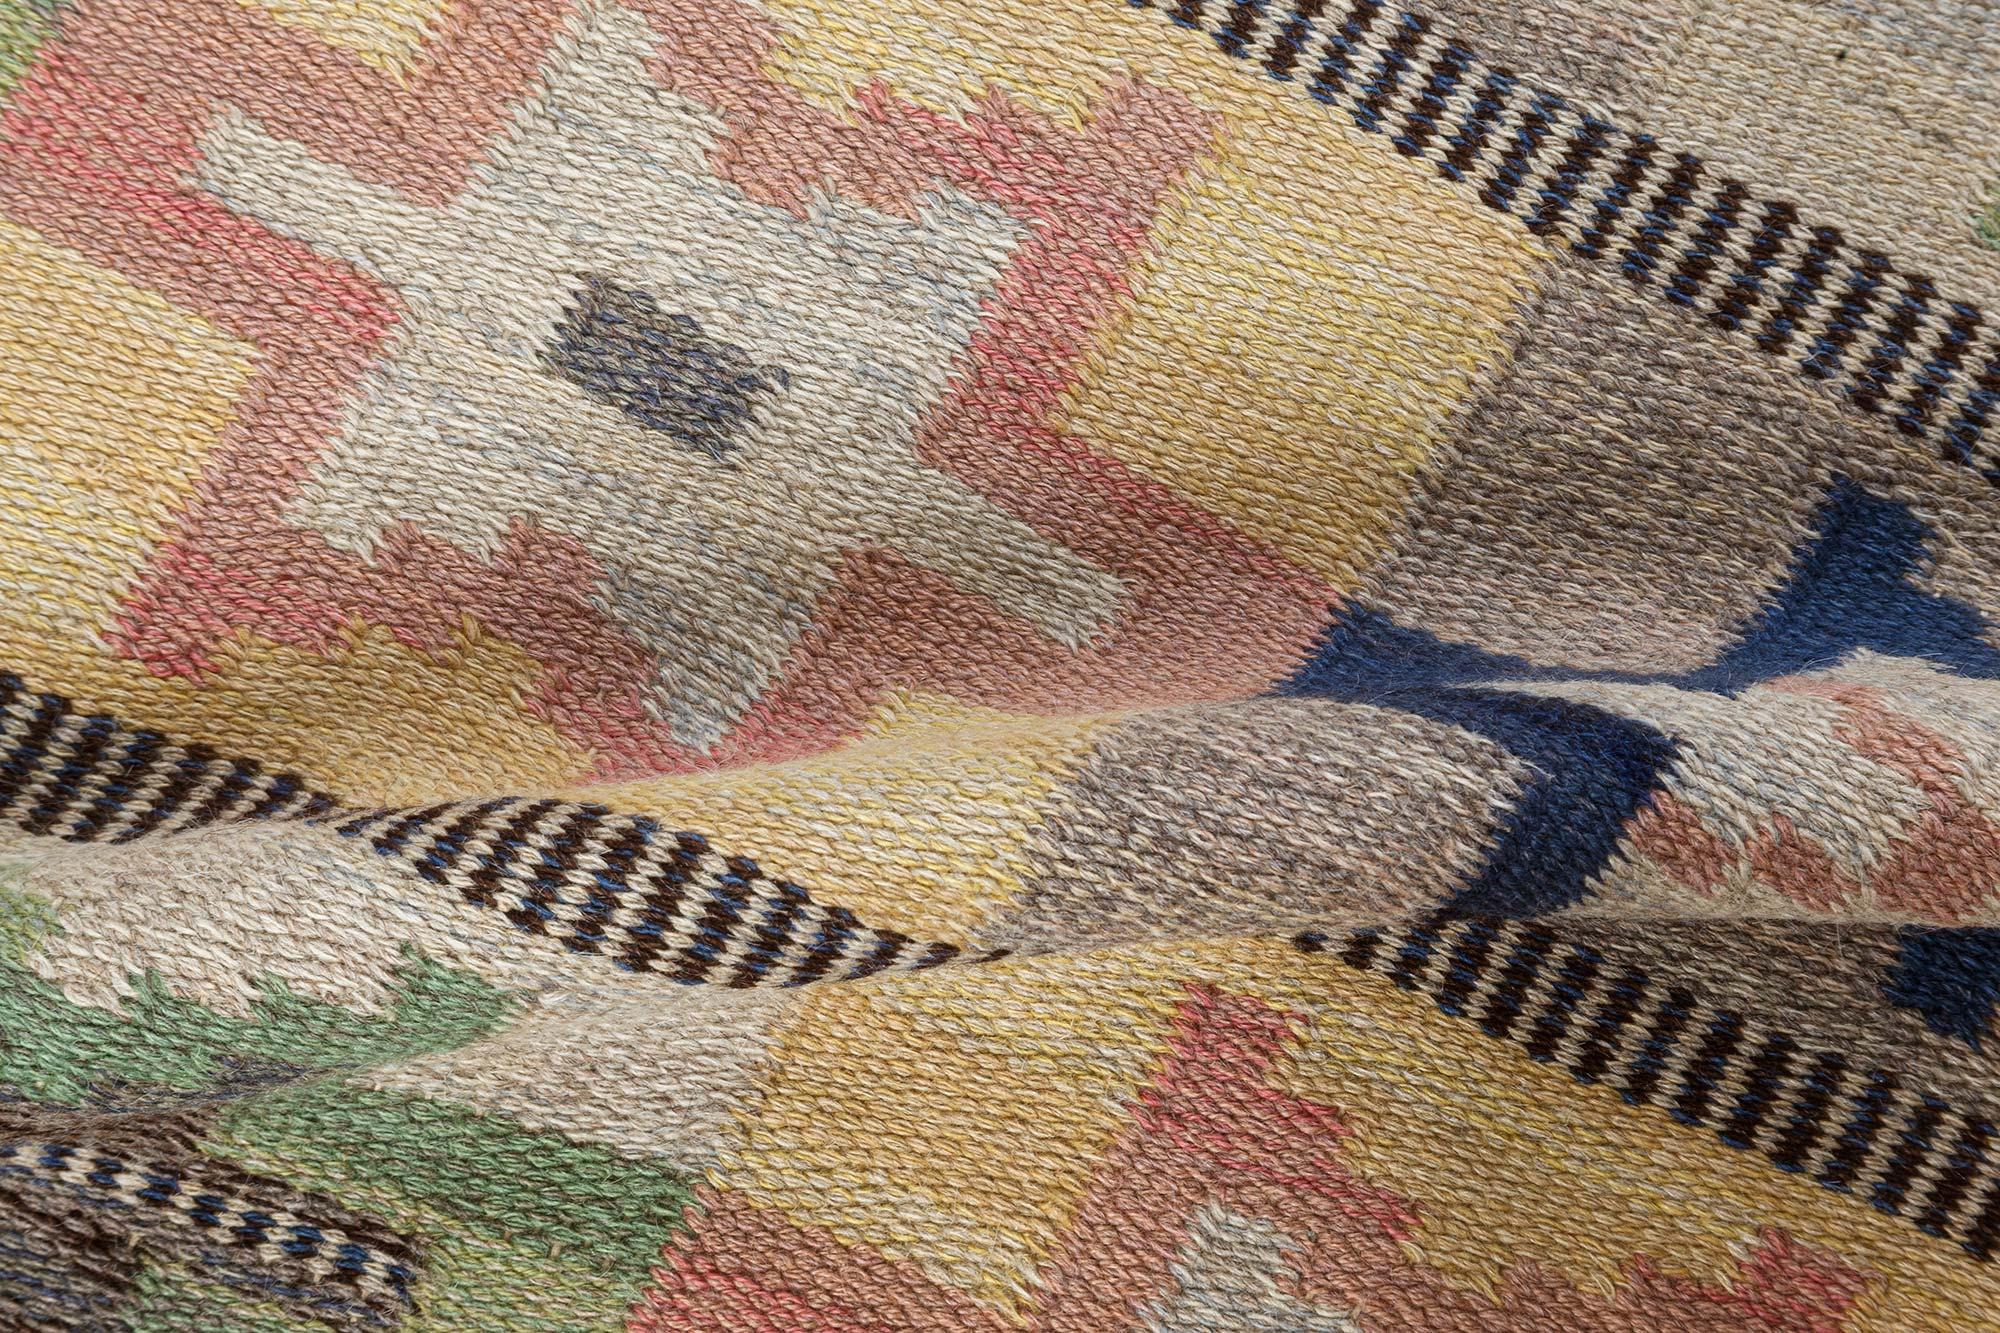 Mid-20th century Swedish green, pink, amber, blue, gray flat-weave wool rug
Size: 4'10